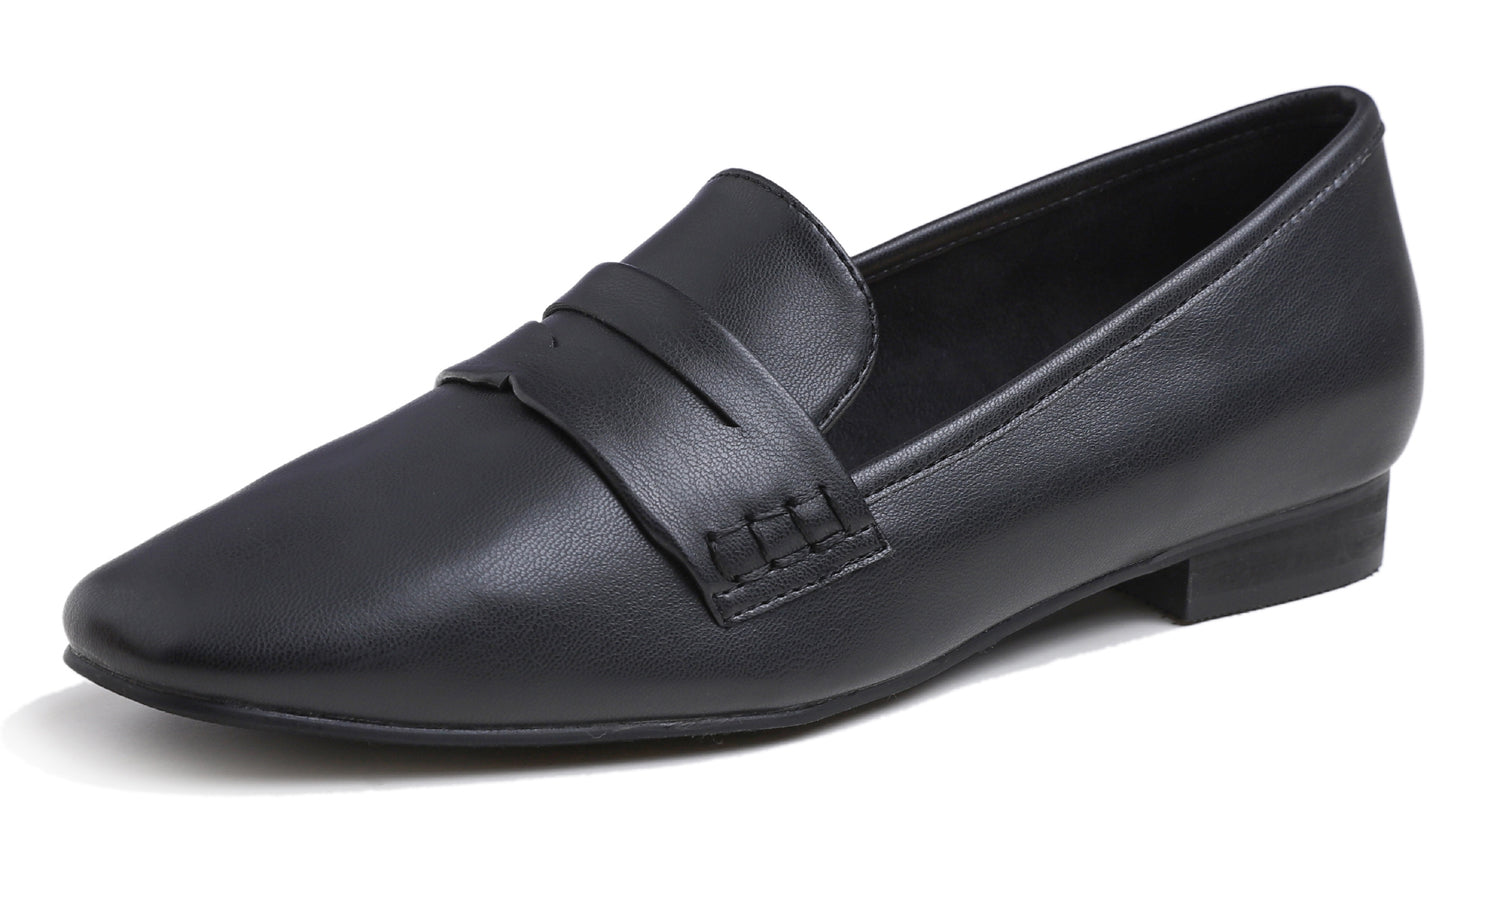 Feversole Women's Fashion Dress Comfort Low Heel Office Penny Loafer Flats Black Plain Vegan Leather